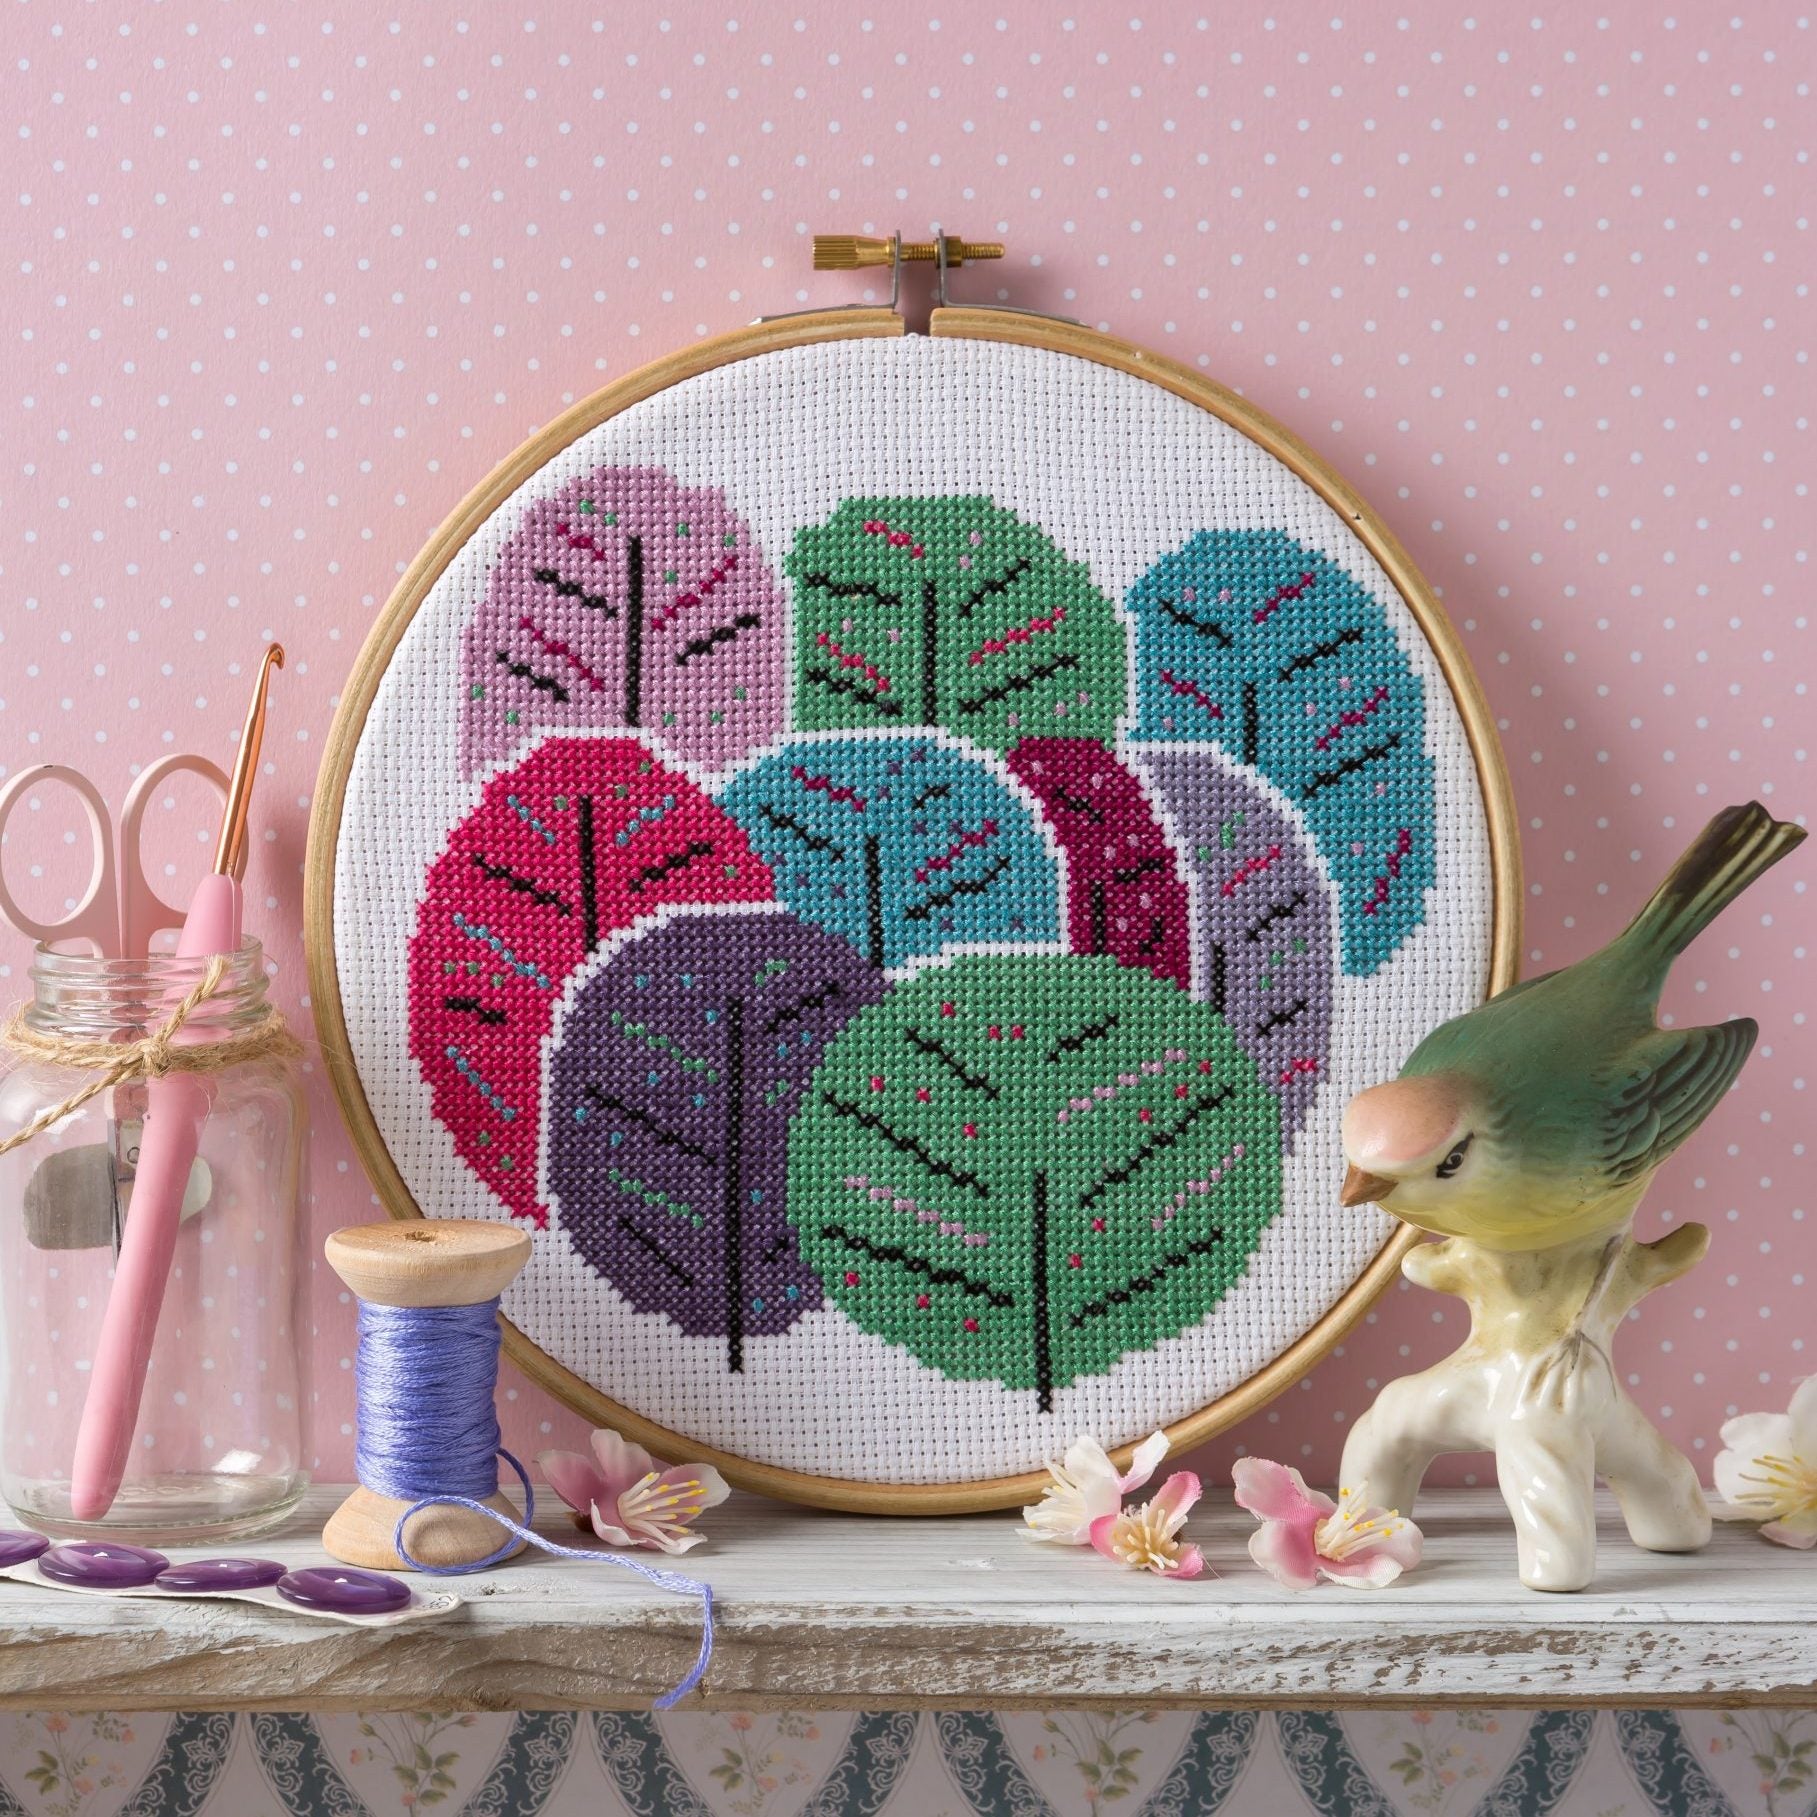 Spring Trees Cross Stitch Kit